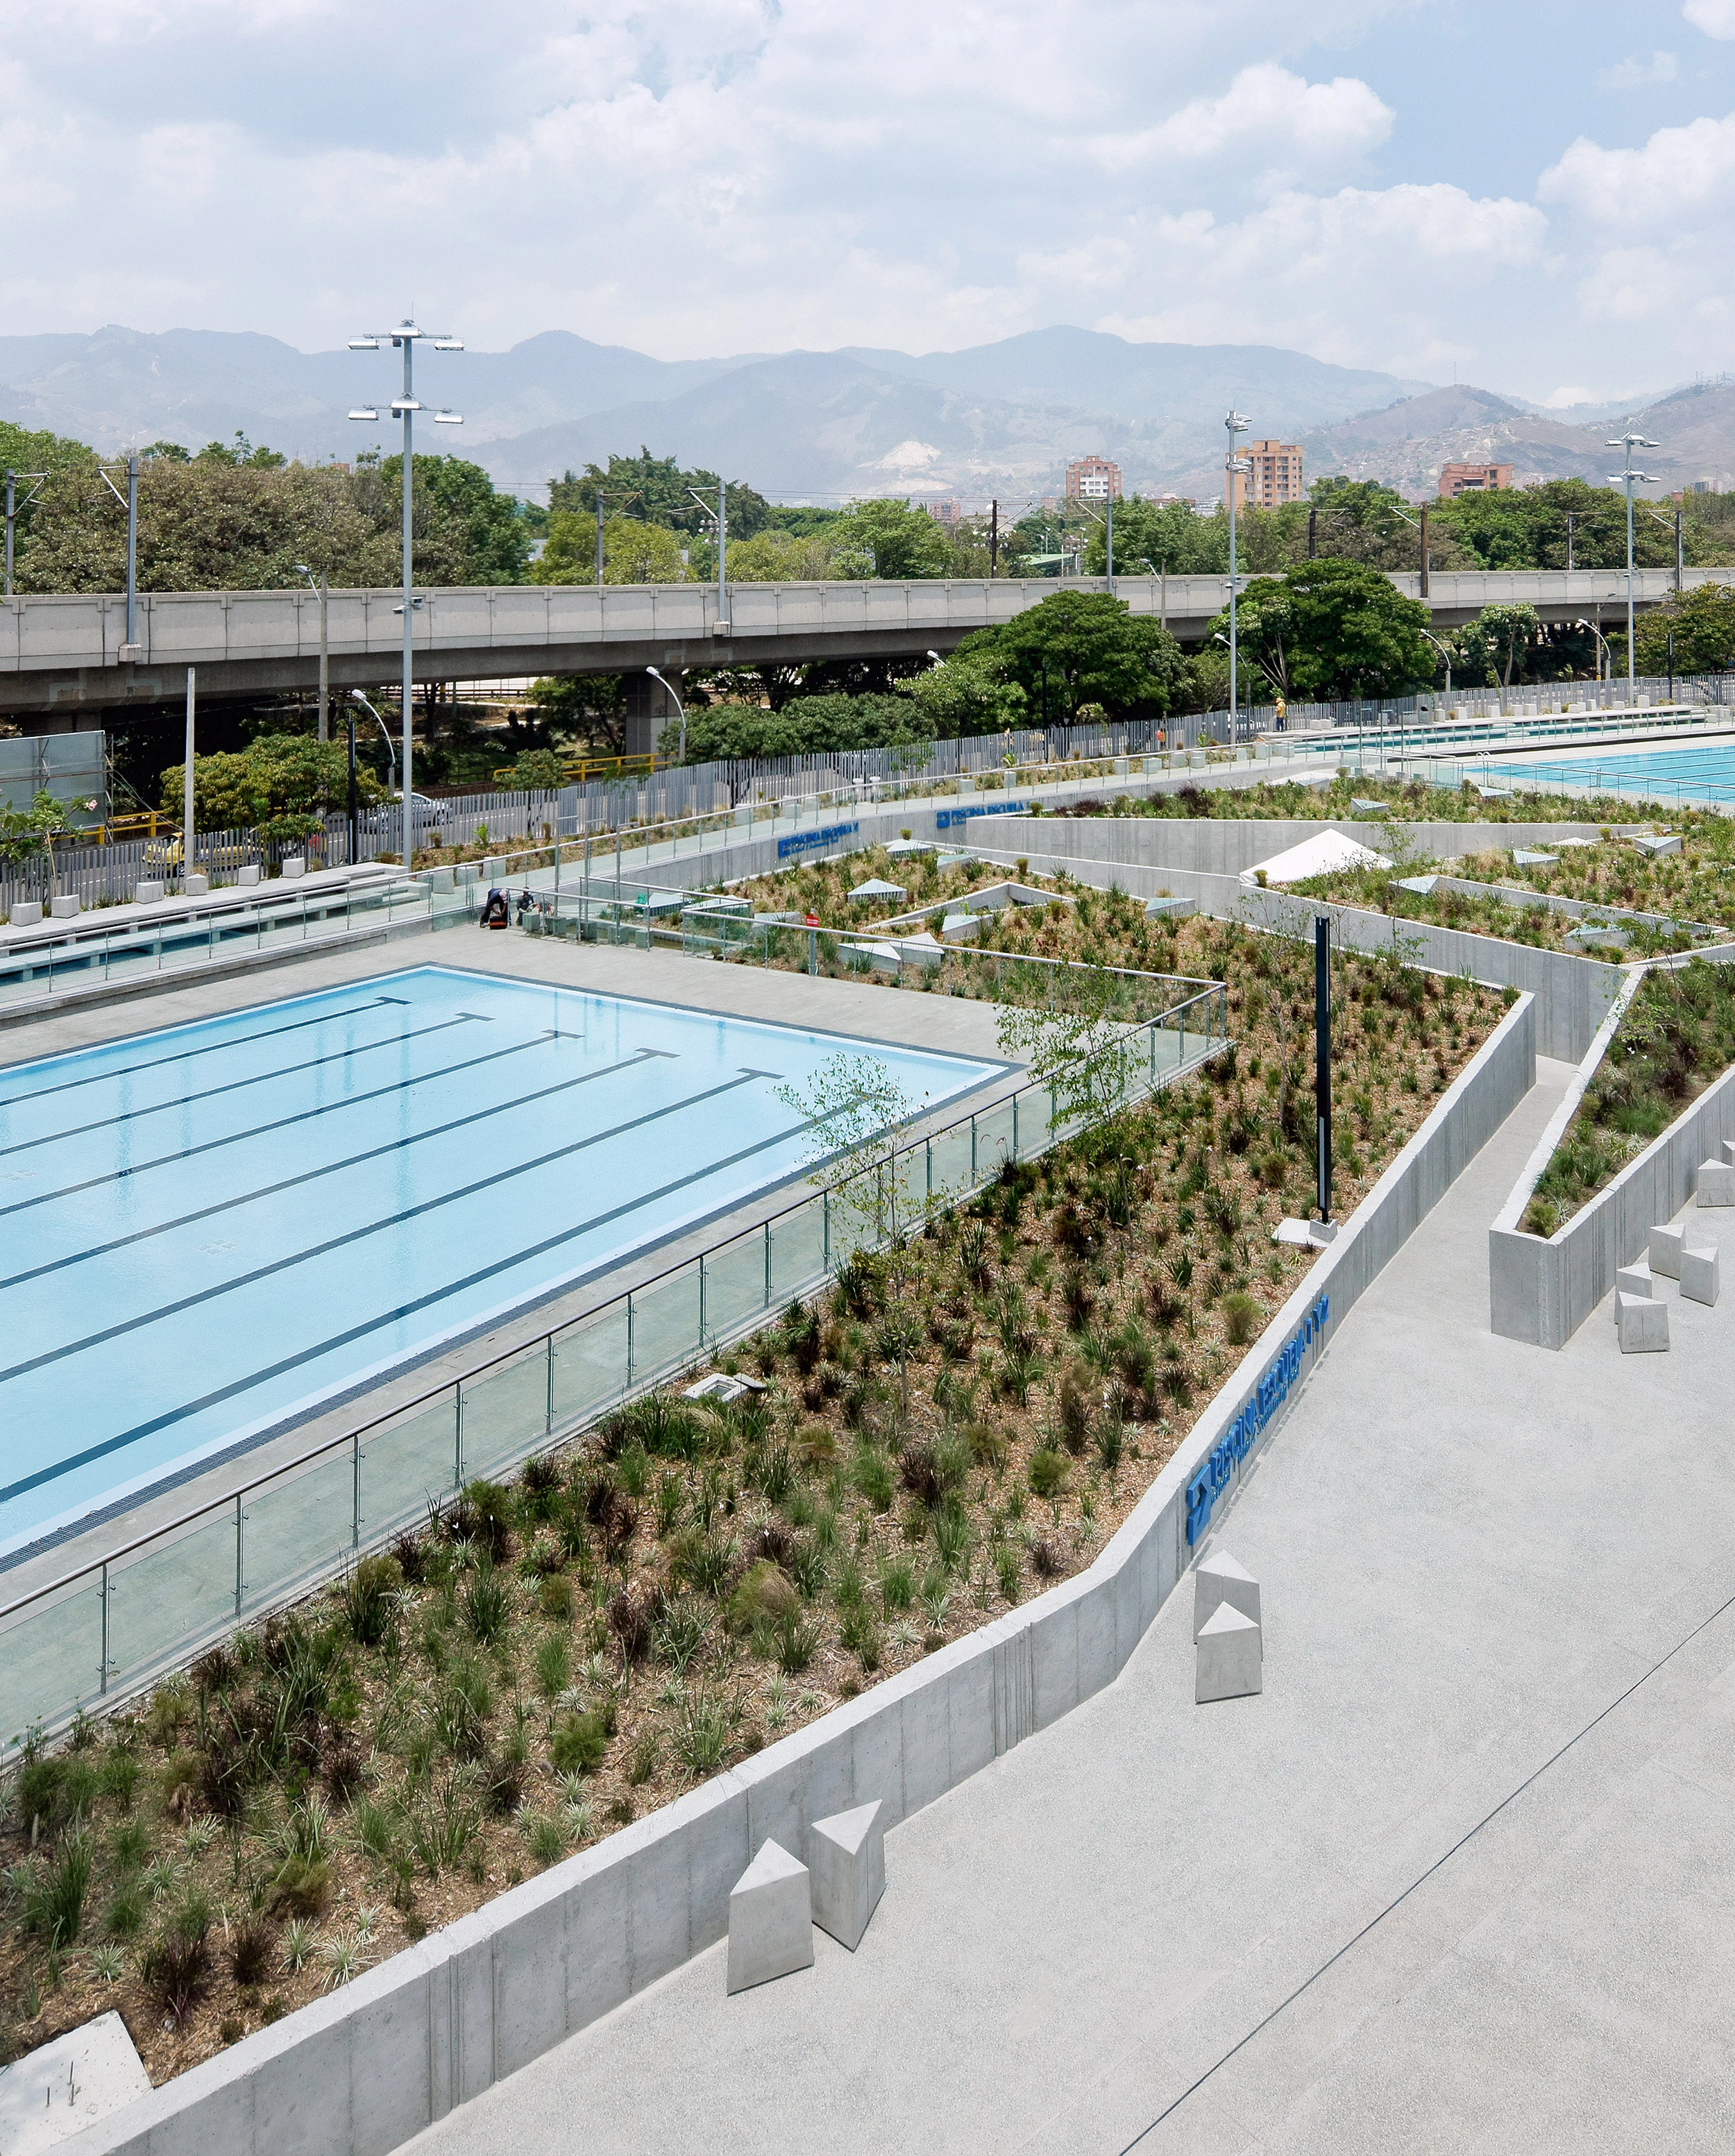 Aquatic Center for the IX South American Games